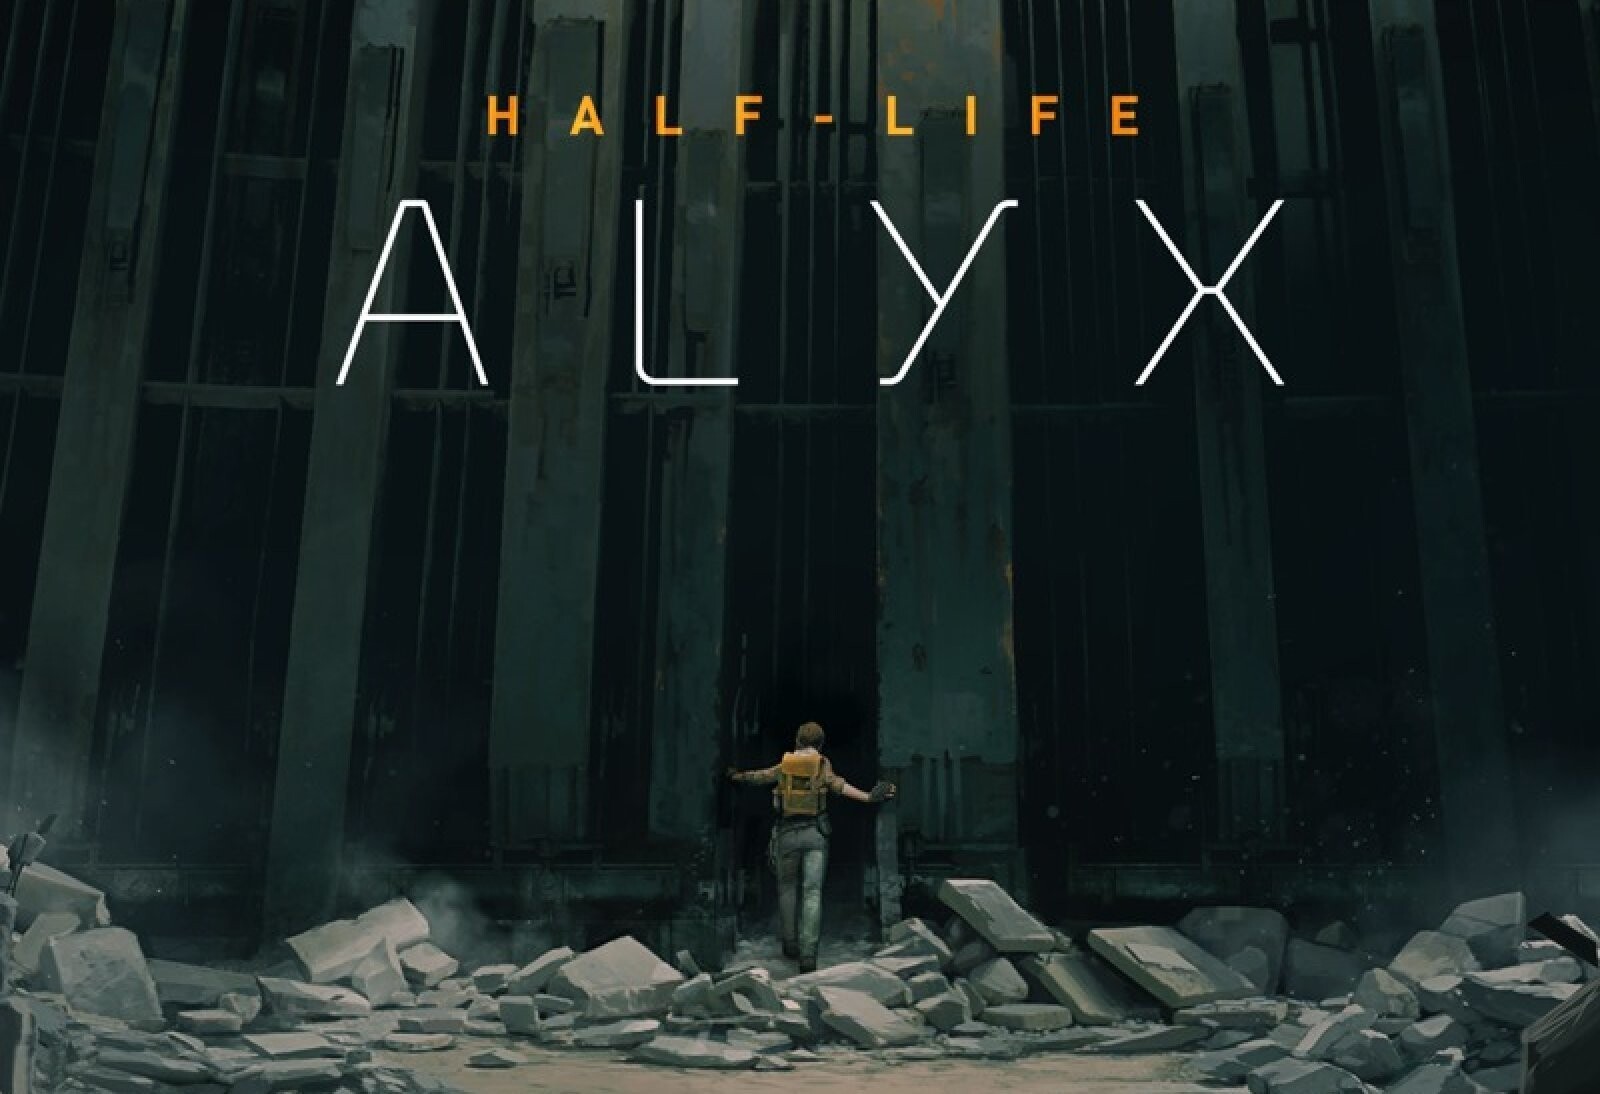 vive pro half life alyx